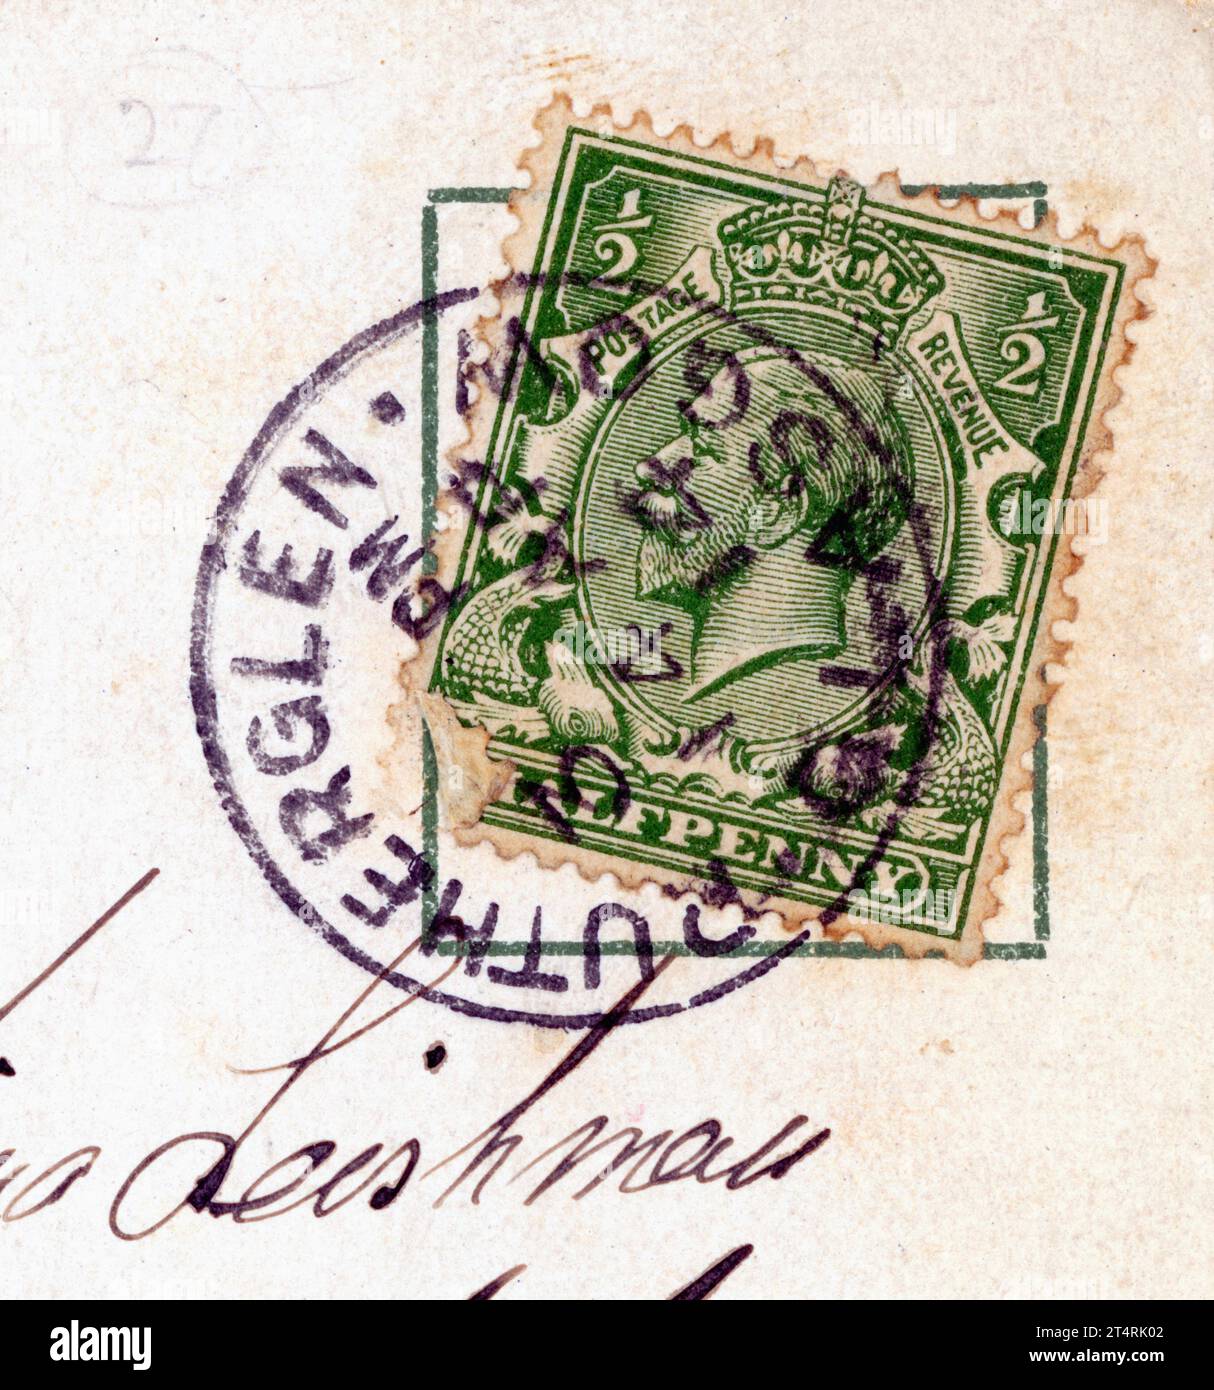 Stamp on a Rutherglen postcard Stock Photo